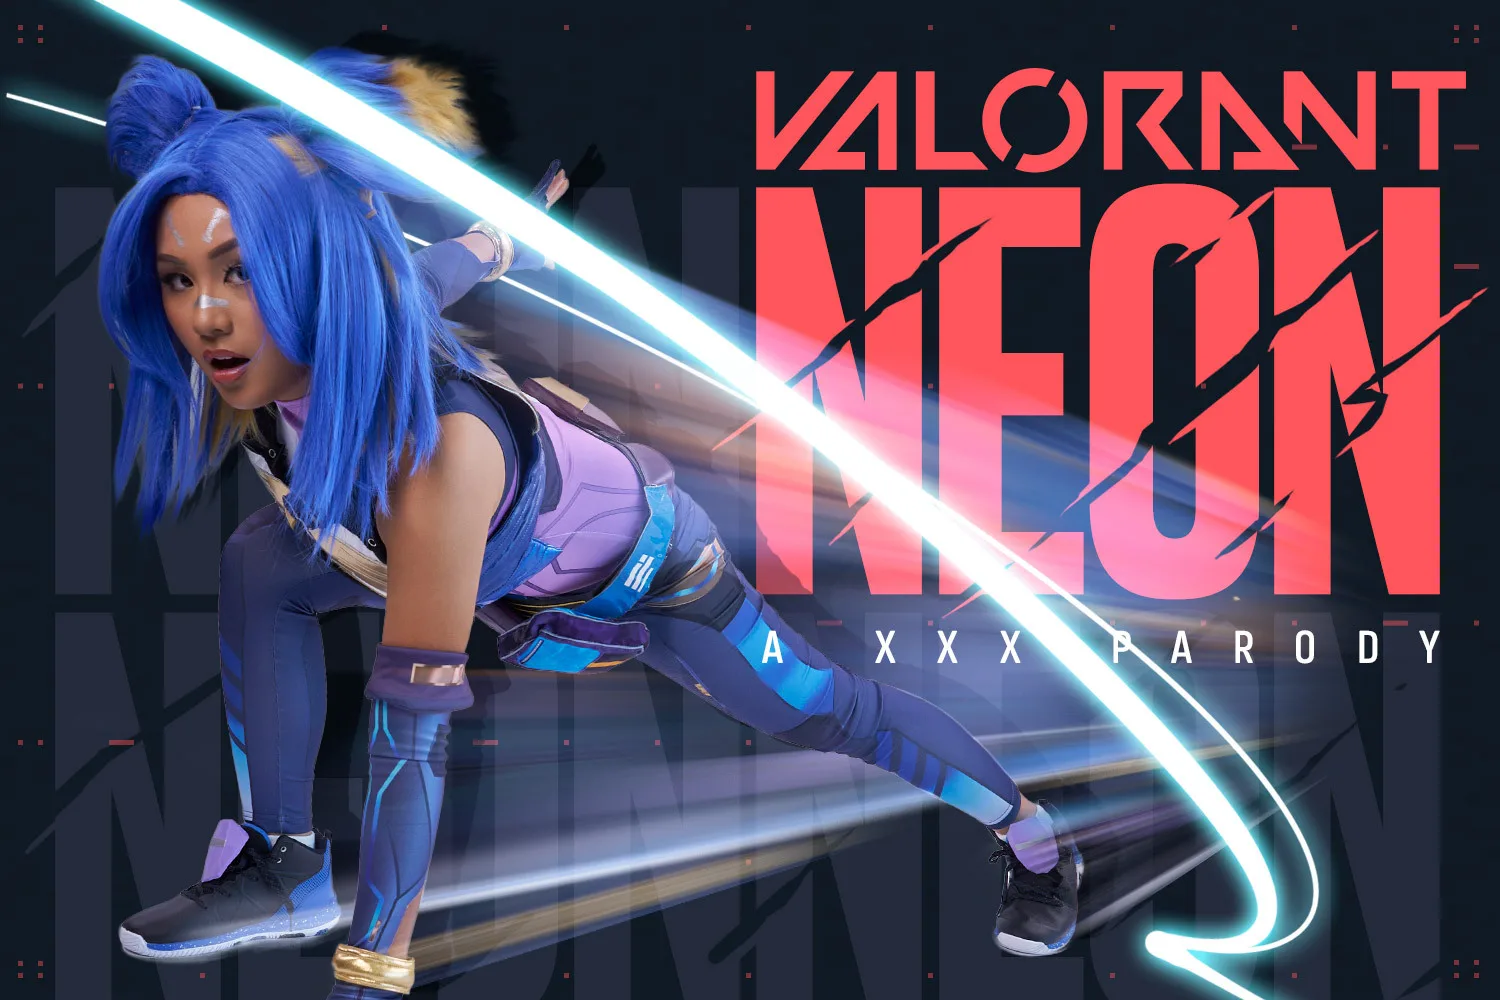 [2024-03-14] Valorant: Neon A XXX Parody - VRCosplayX